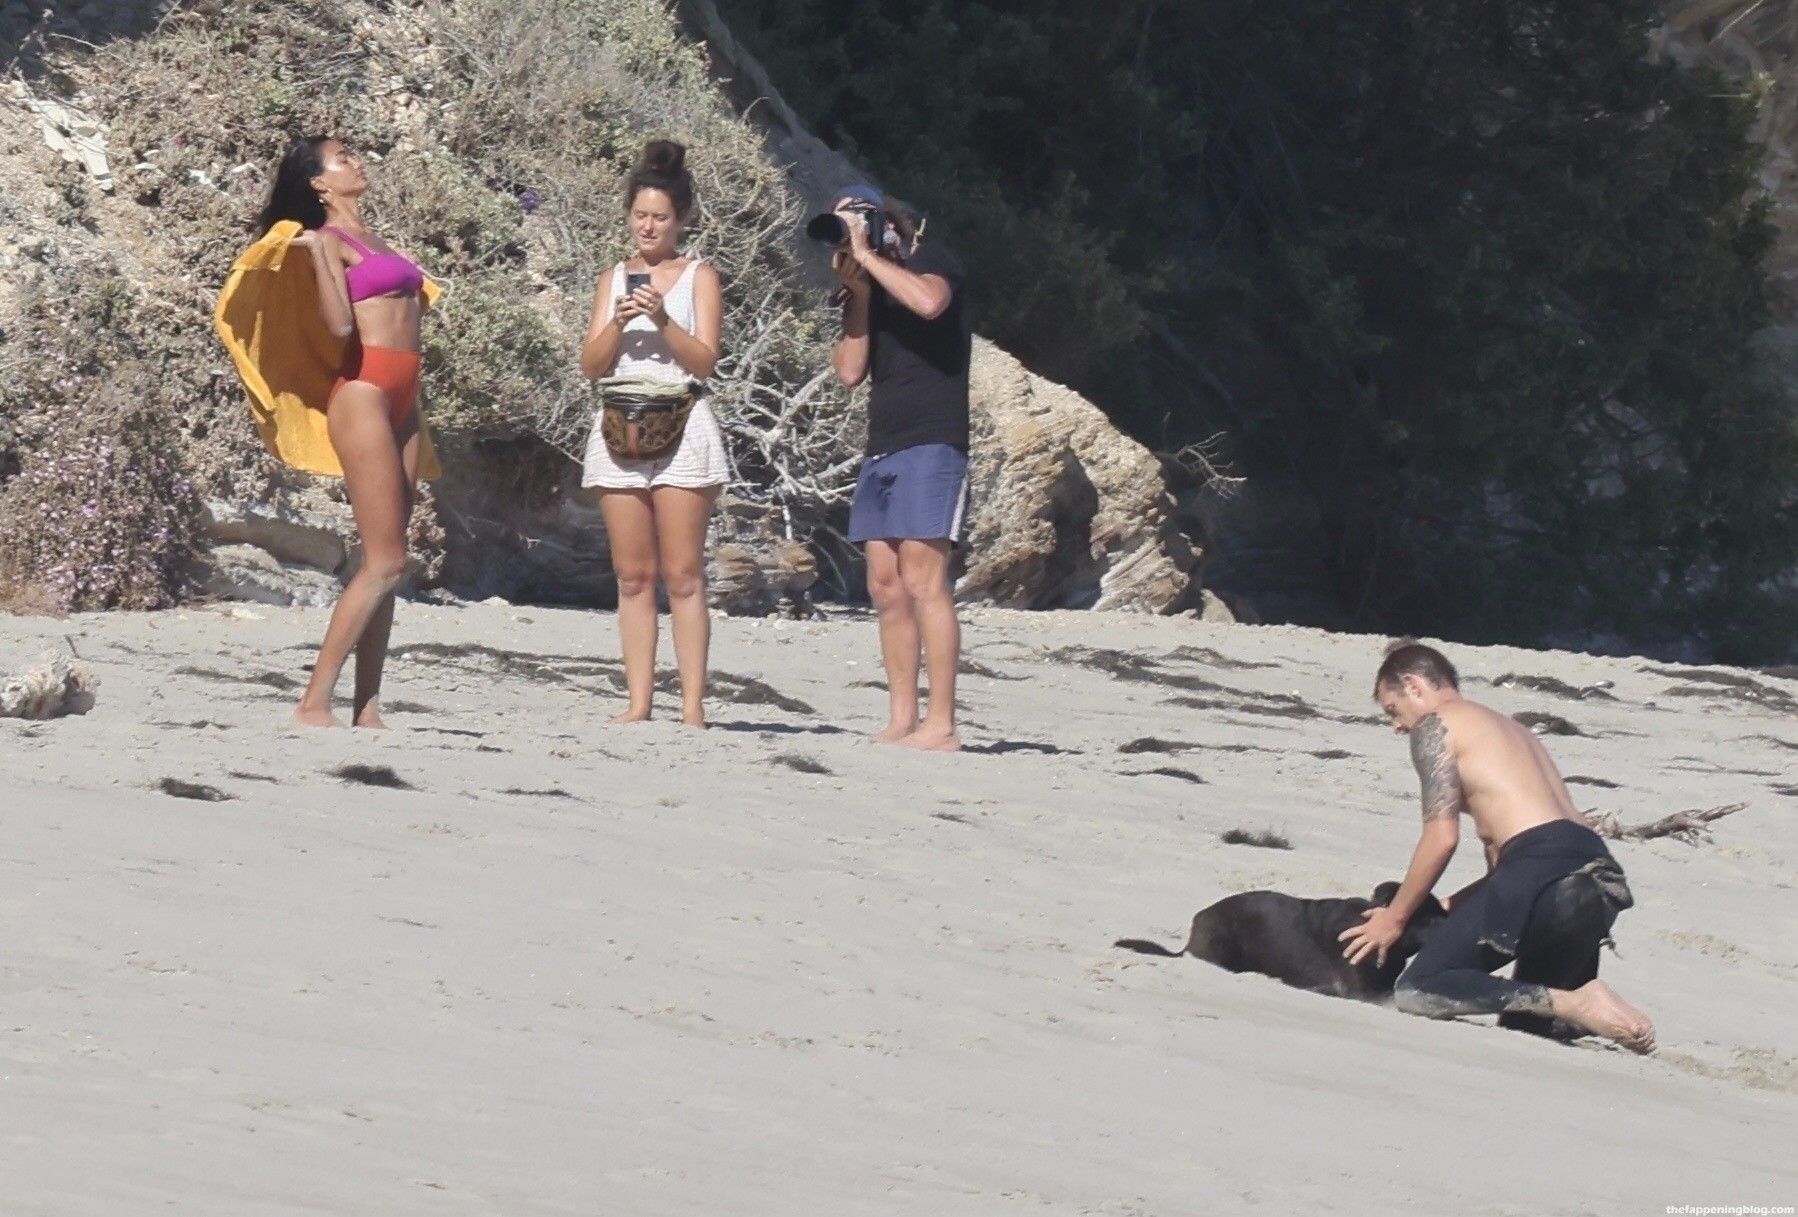 Kelly Gale & Joel Kinnaman Attend a Photoshoot on the Beach in M
alibu (115 Photos)